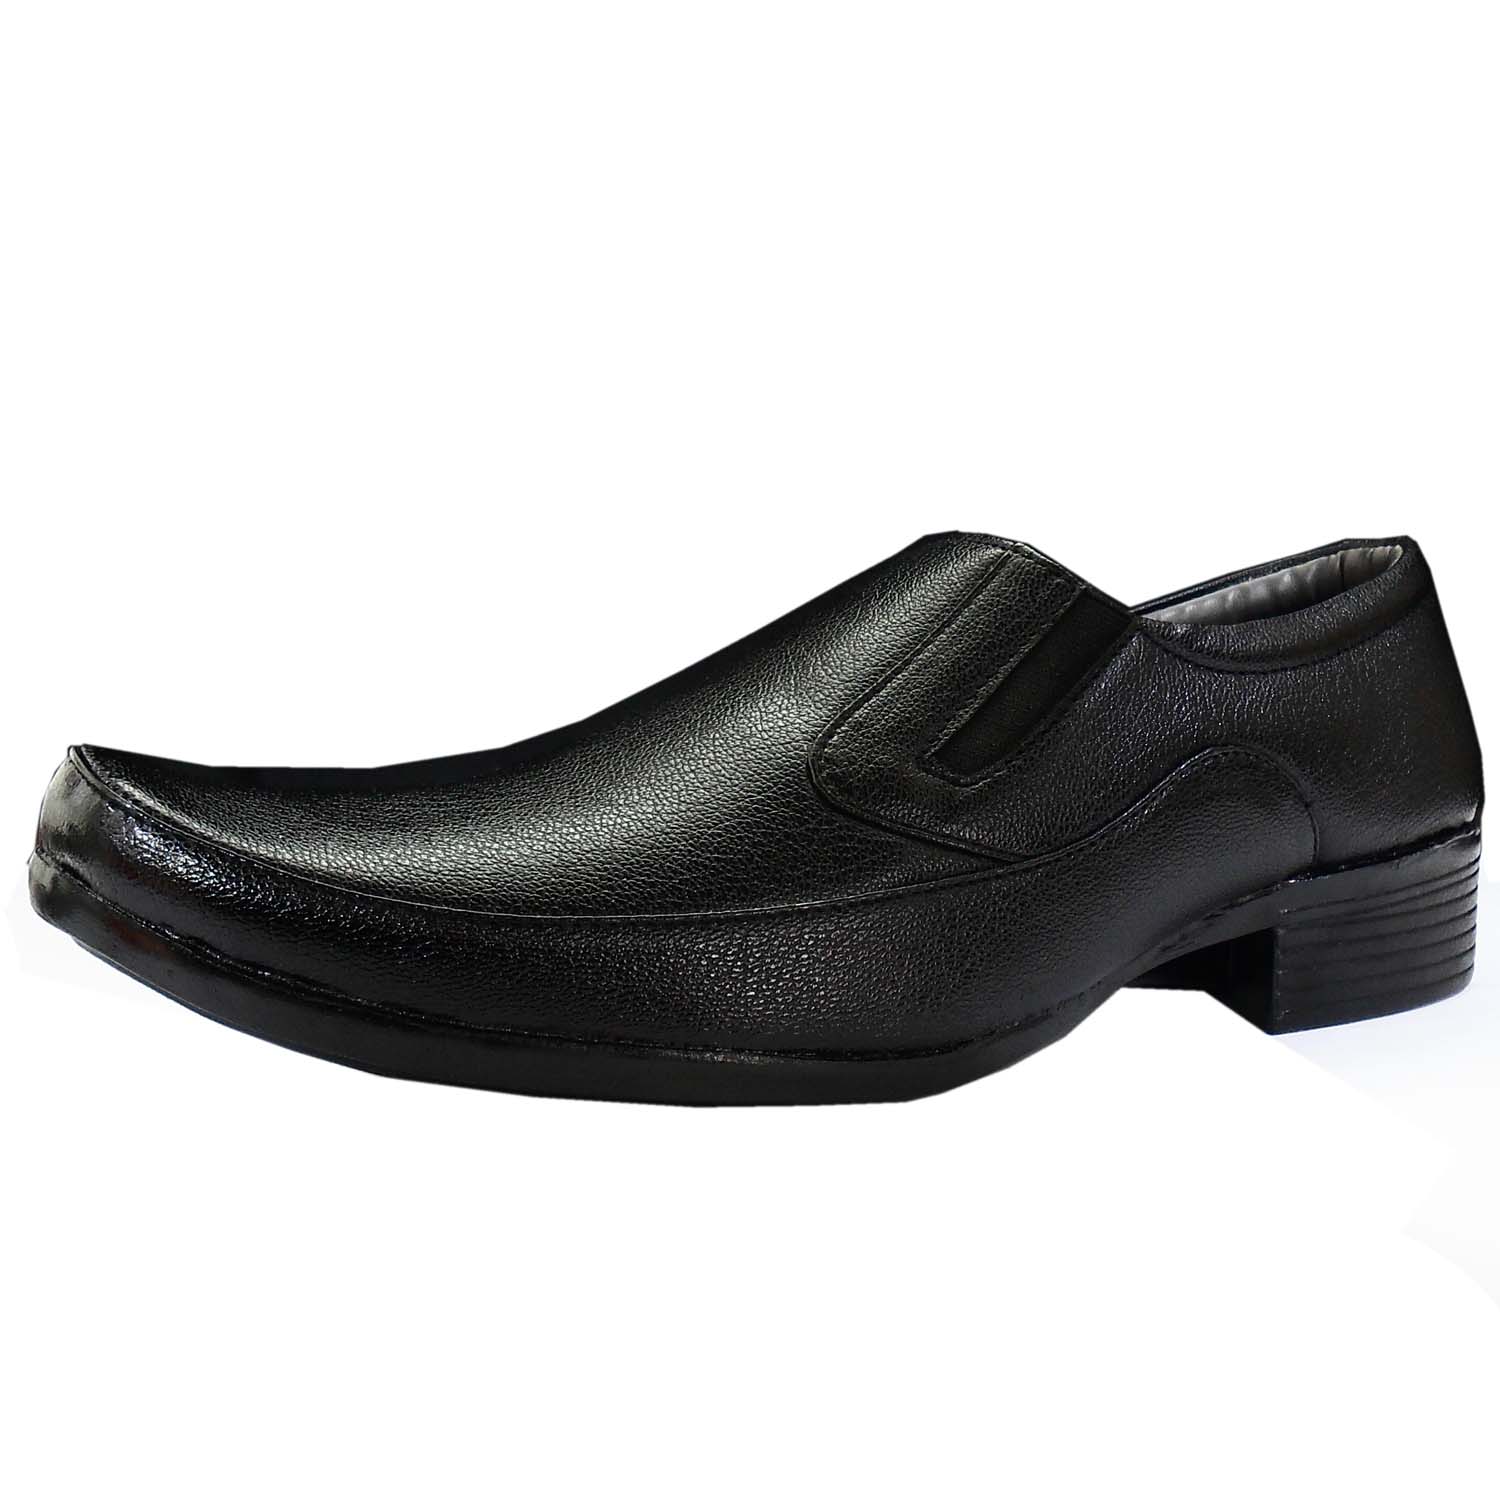 Buy Footgear Men's Black Formal Slip on Shoes Online @ ₹1499 from ShopClues